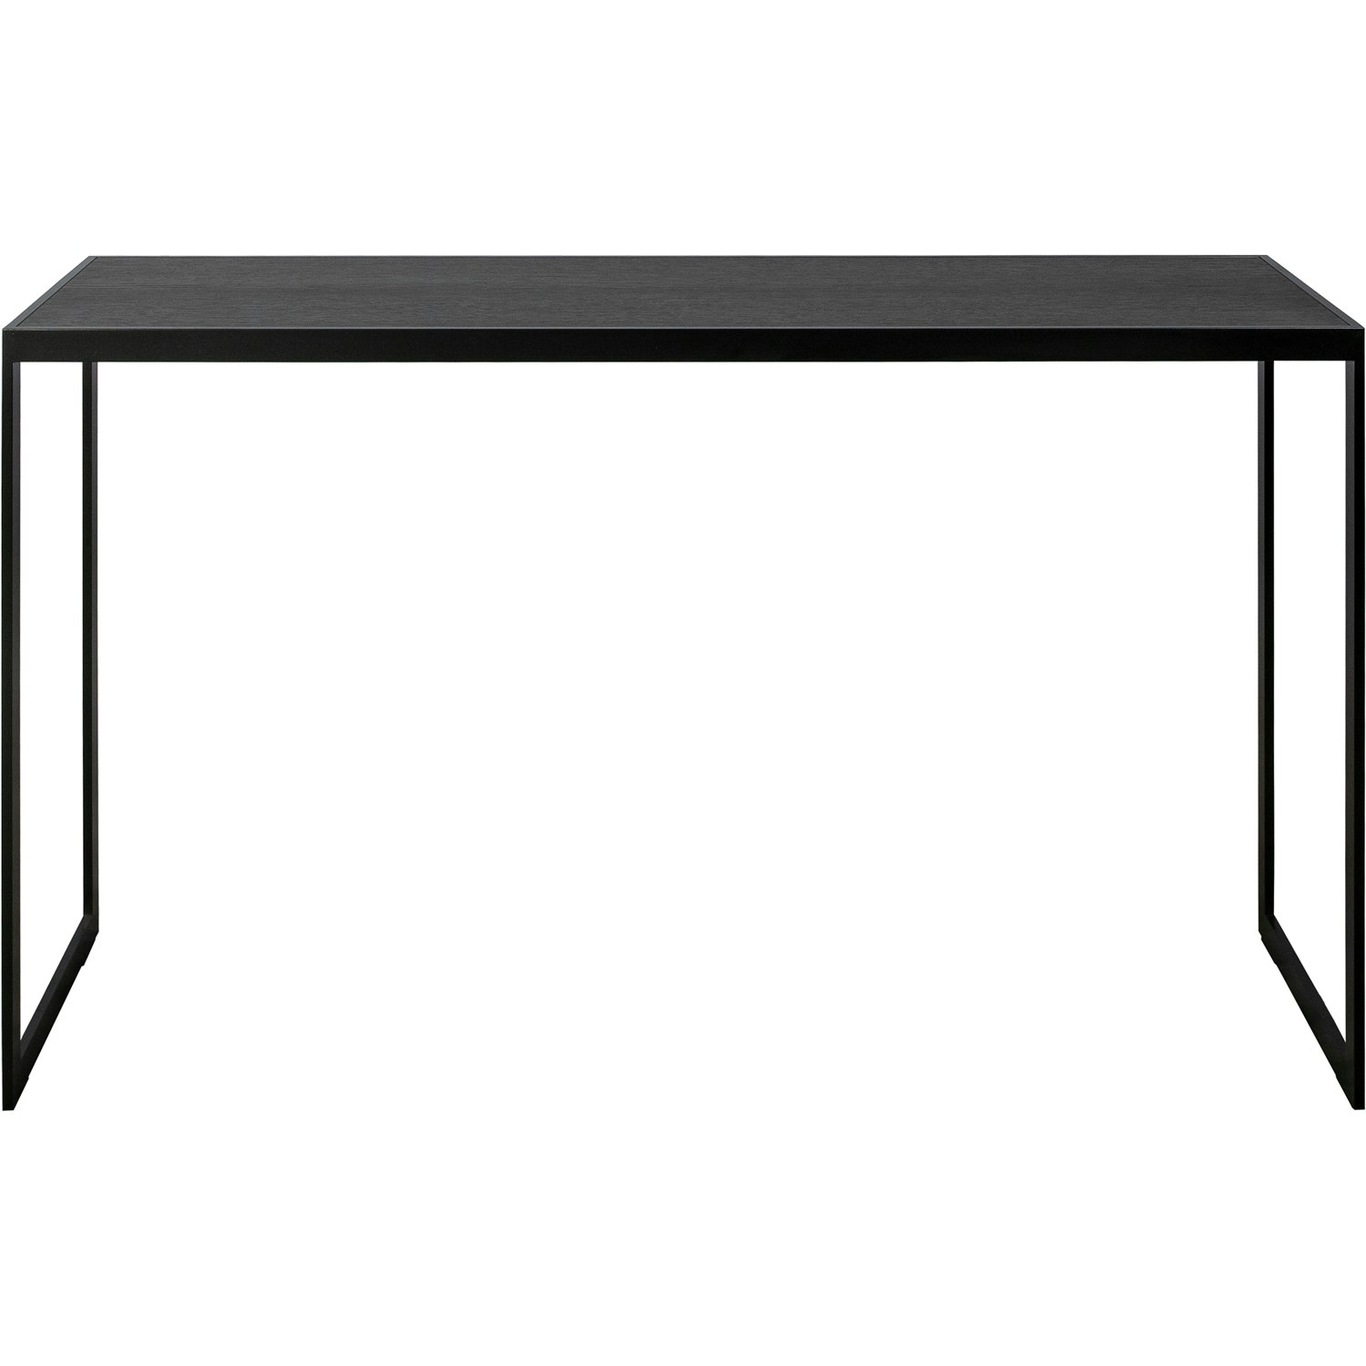 Square Console Table 122x36x70 cm, Black/Black Oak